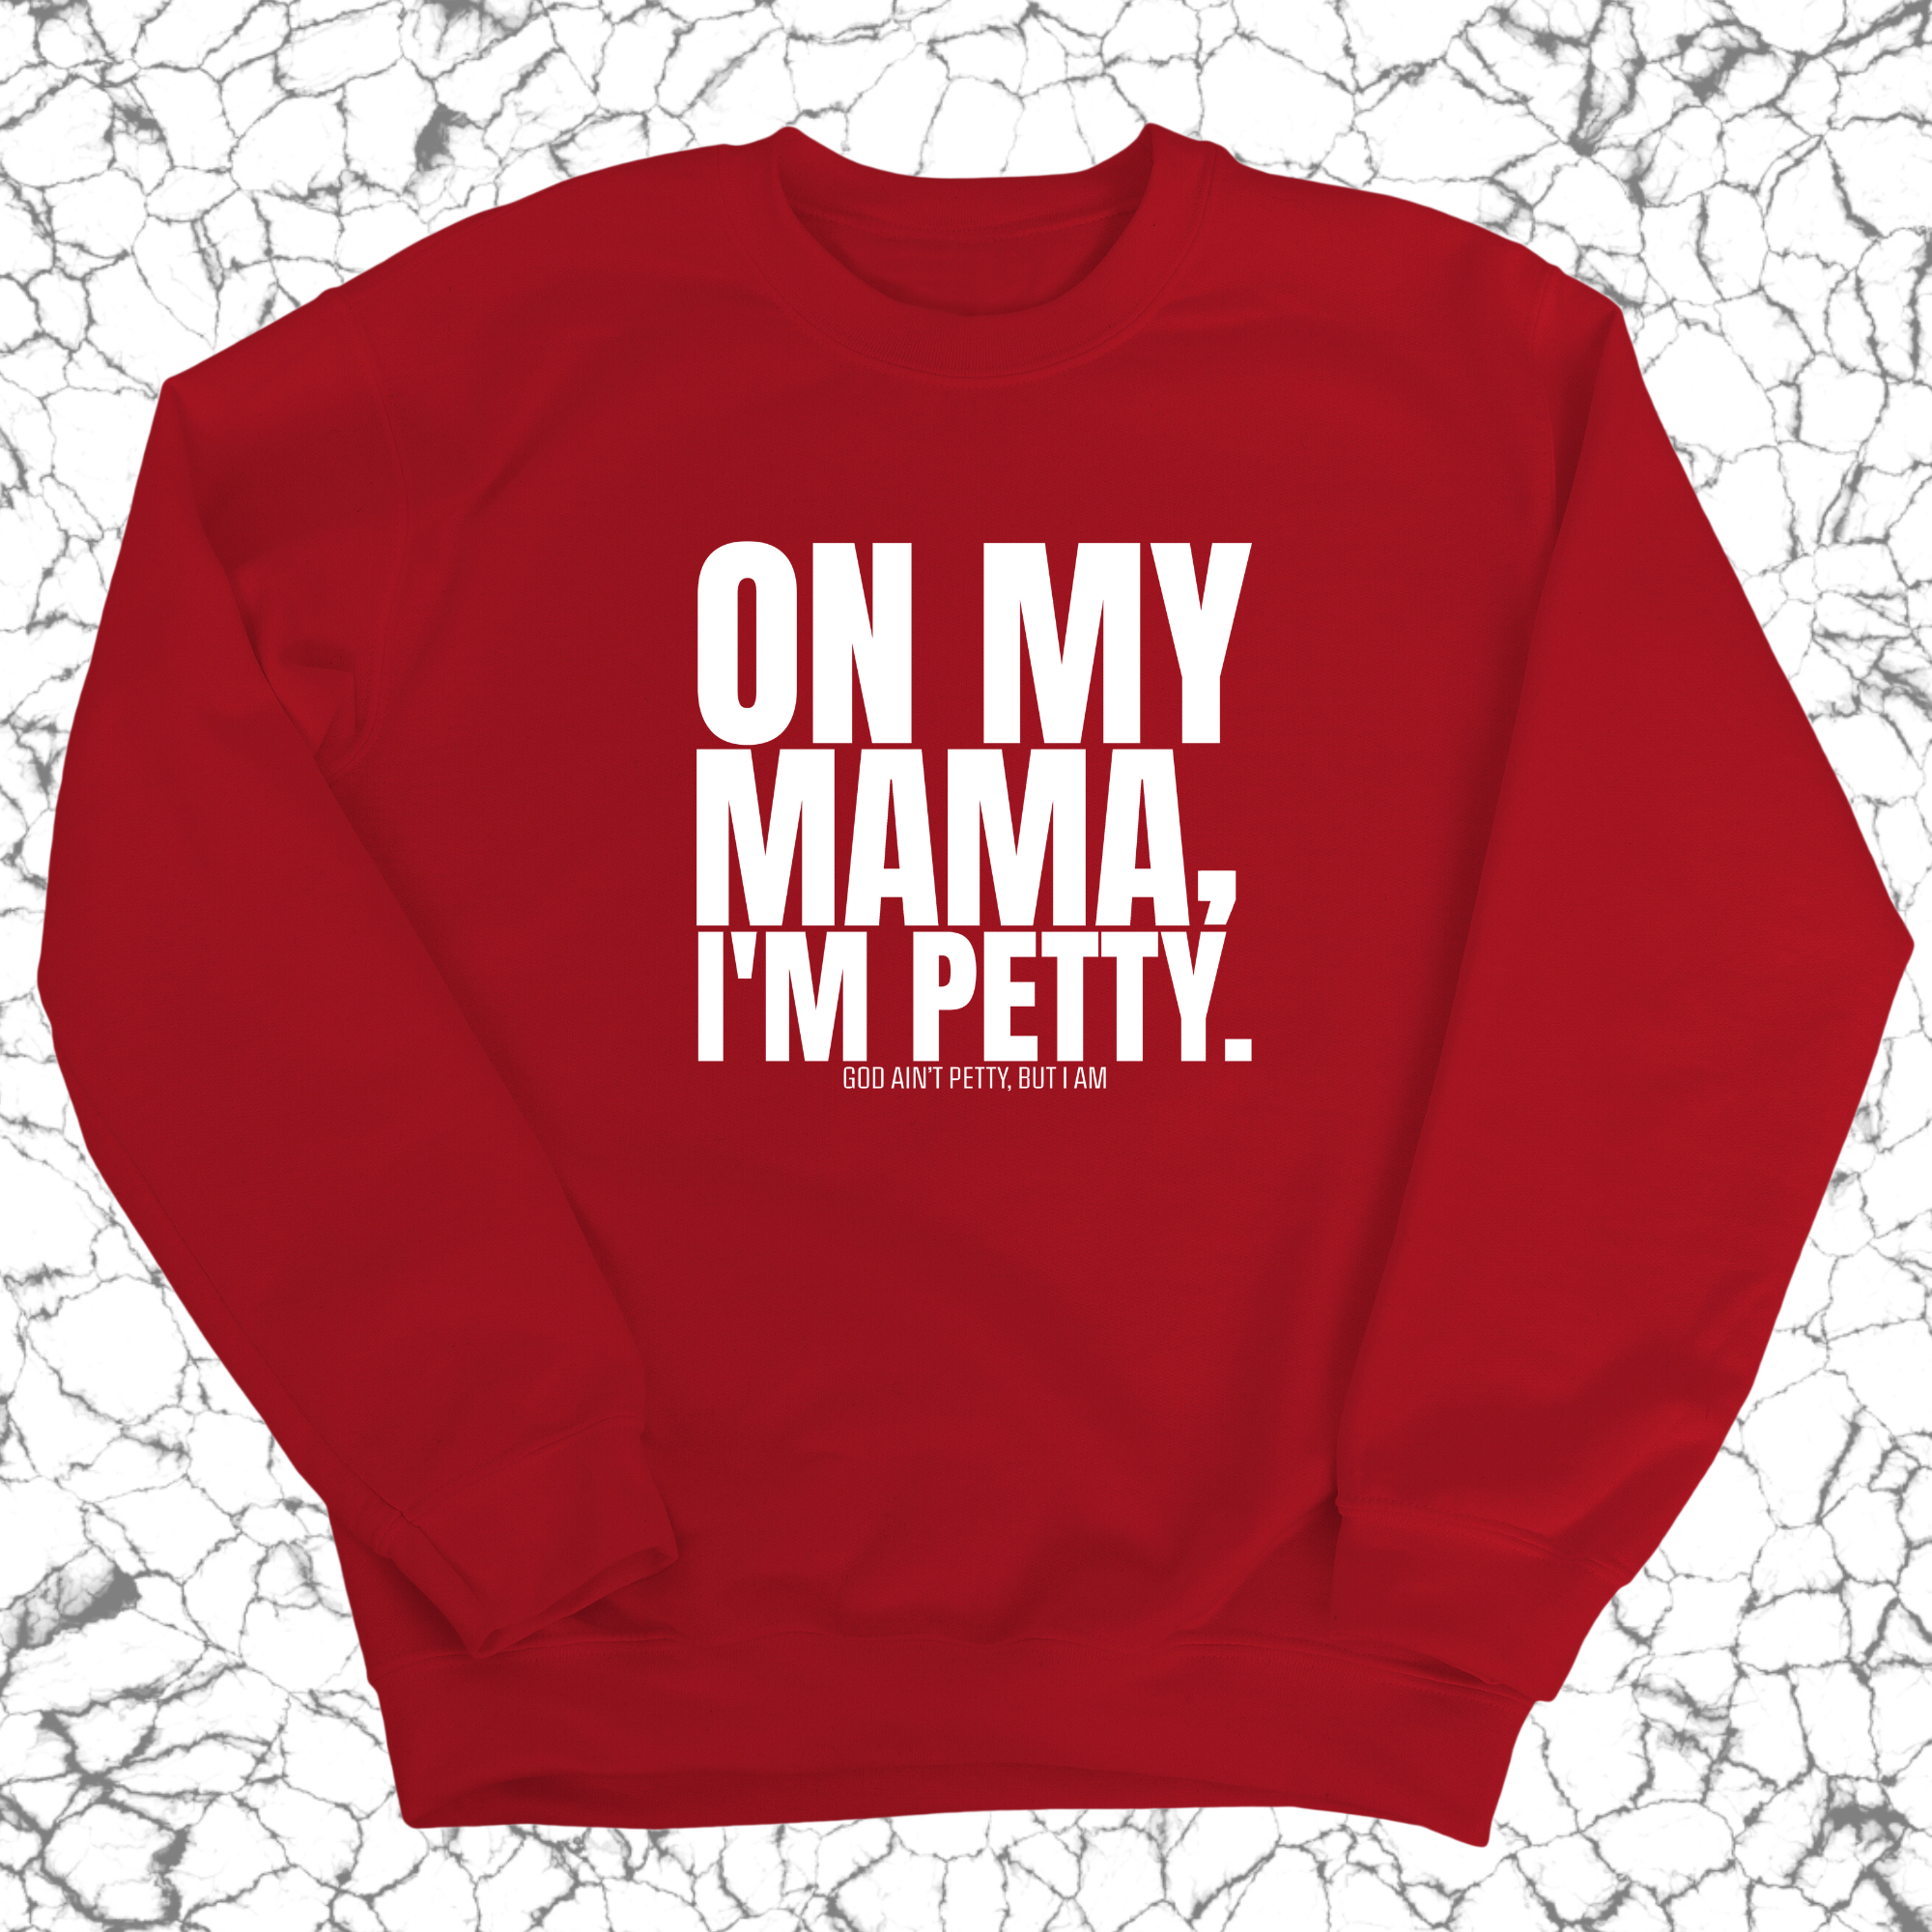 On my Mama I'm Petty Unisex Sweatshirt-Sweatshirt-The Original God Ain't Petty But I Am